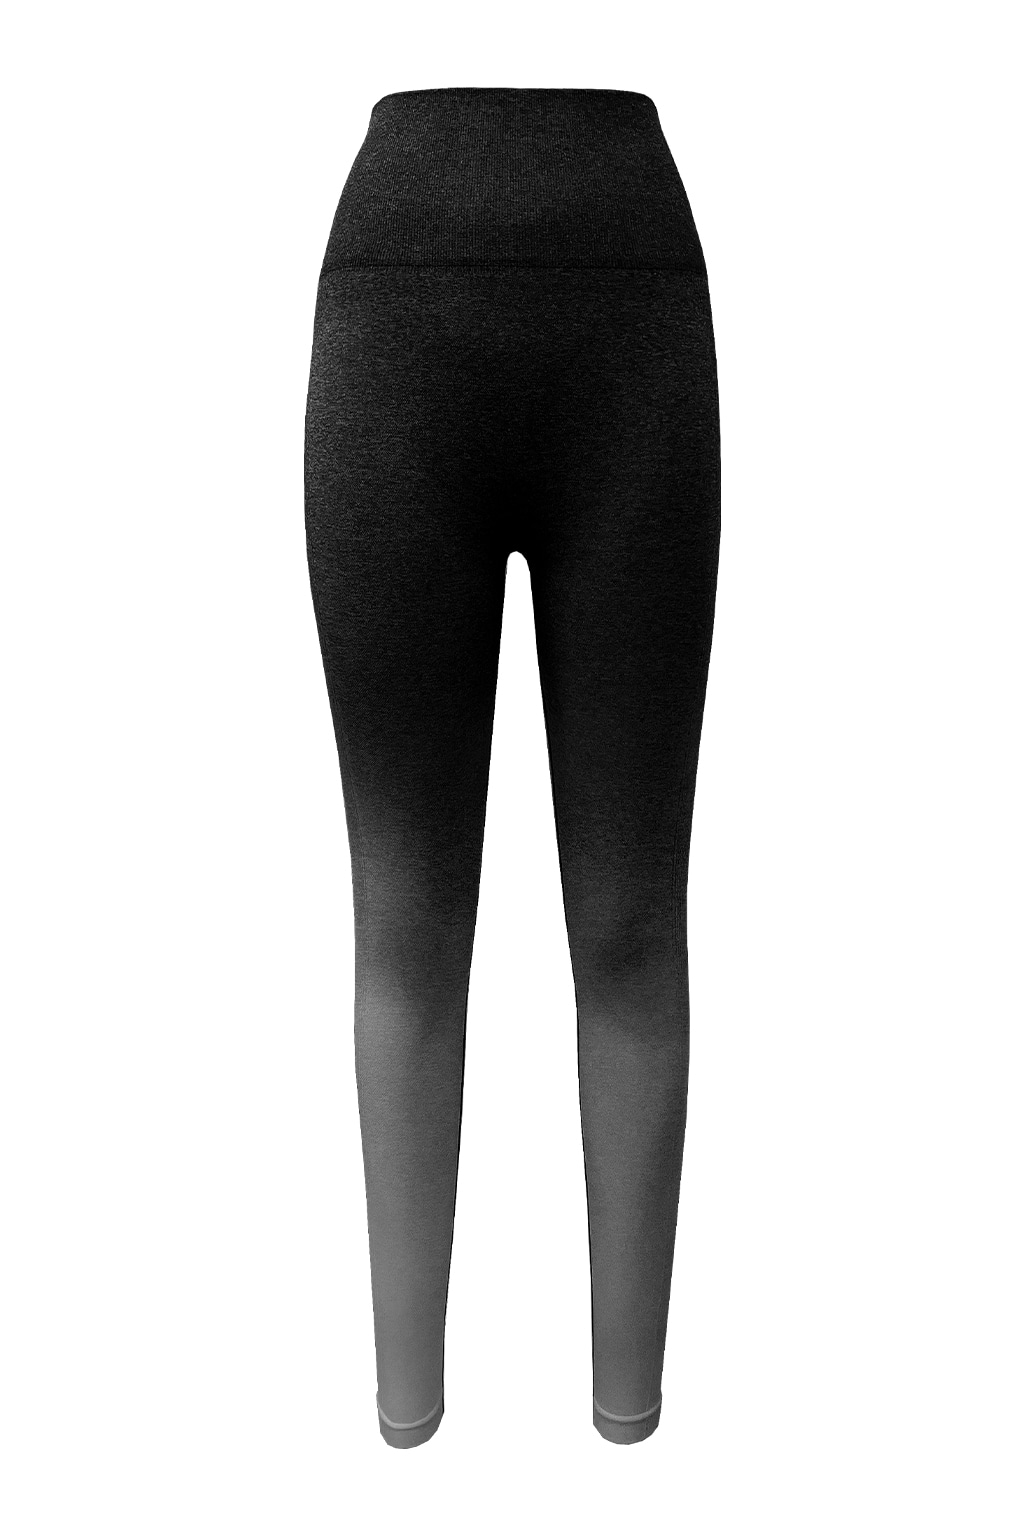 Compression gradient leggings black gray